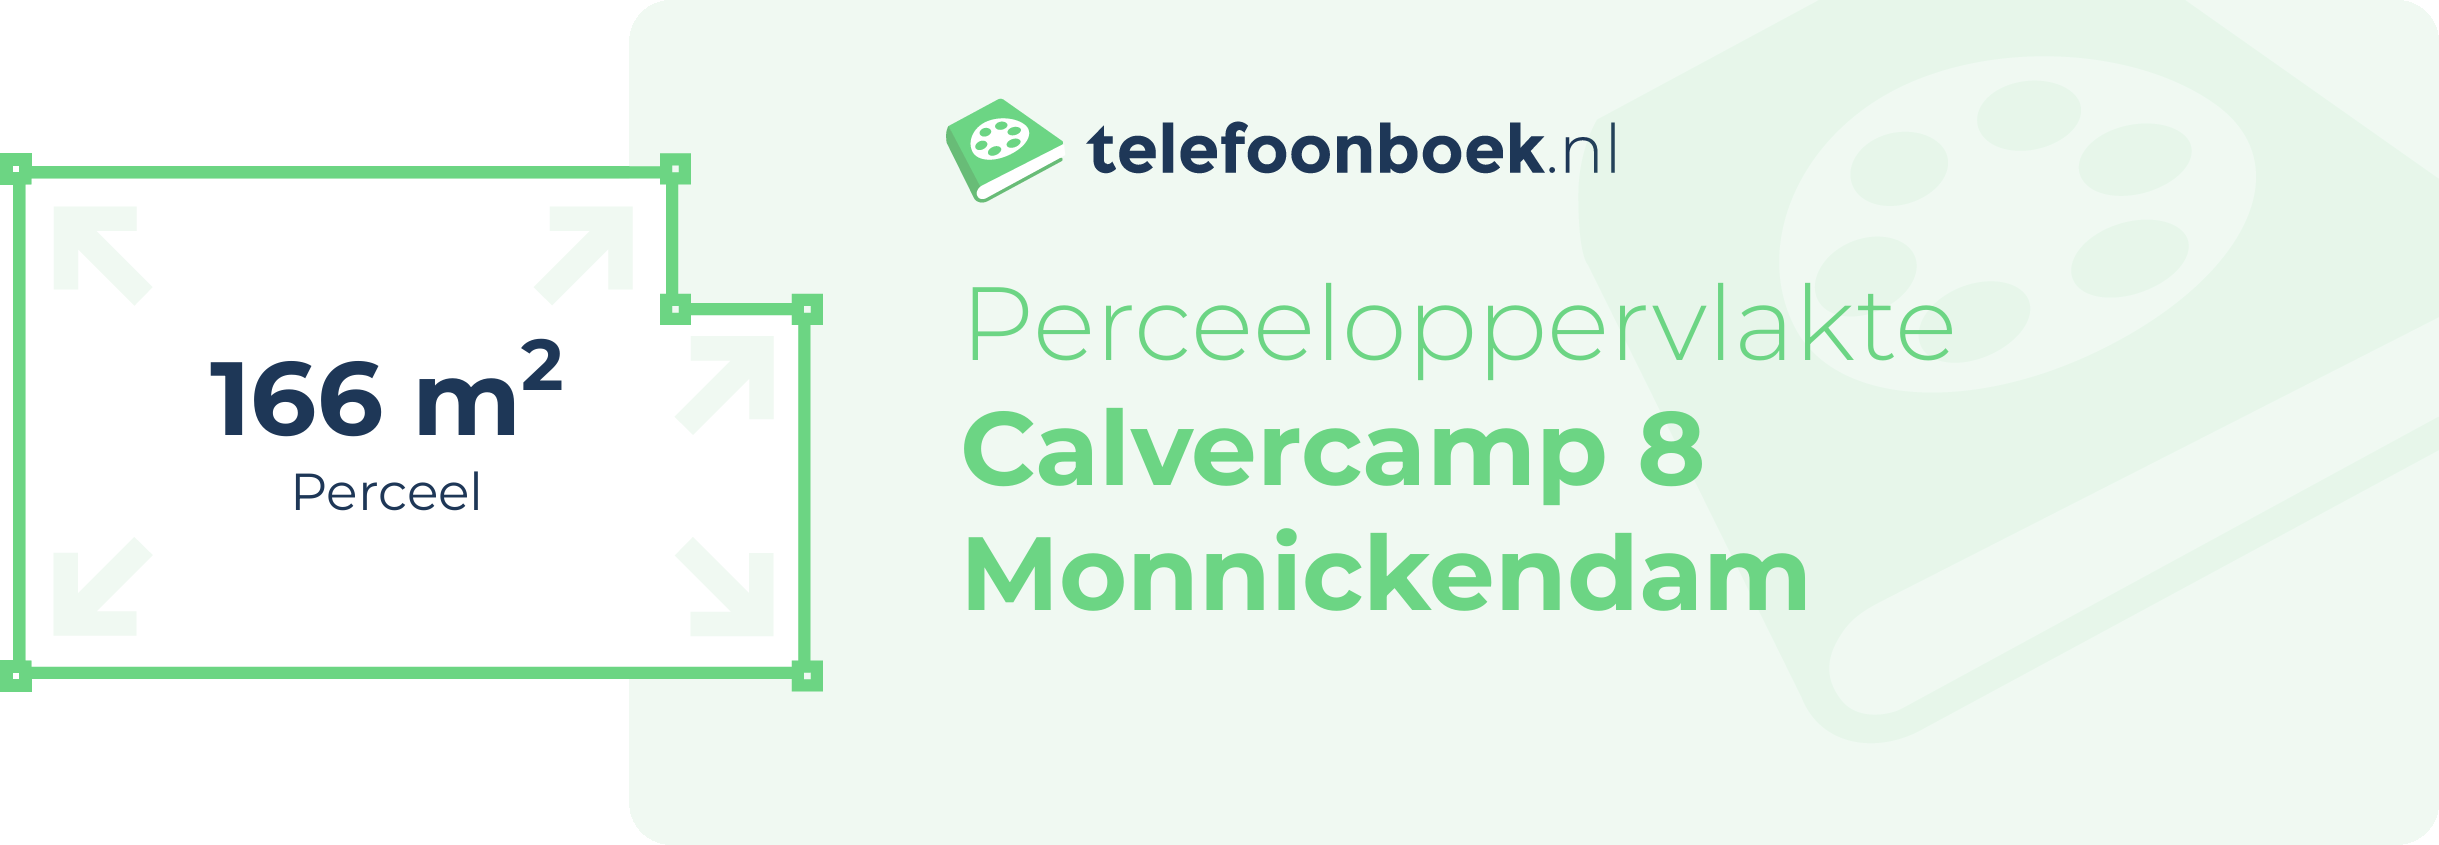 Perceeloppervlakte Calvercamp 8 Monnickendam